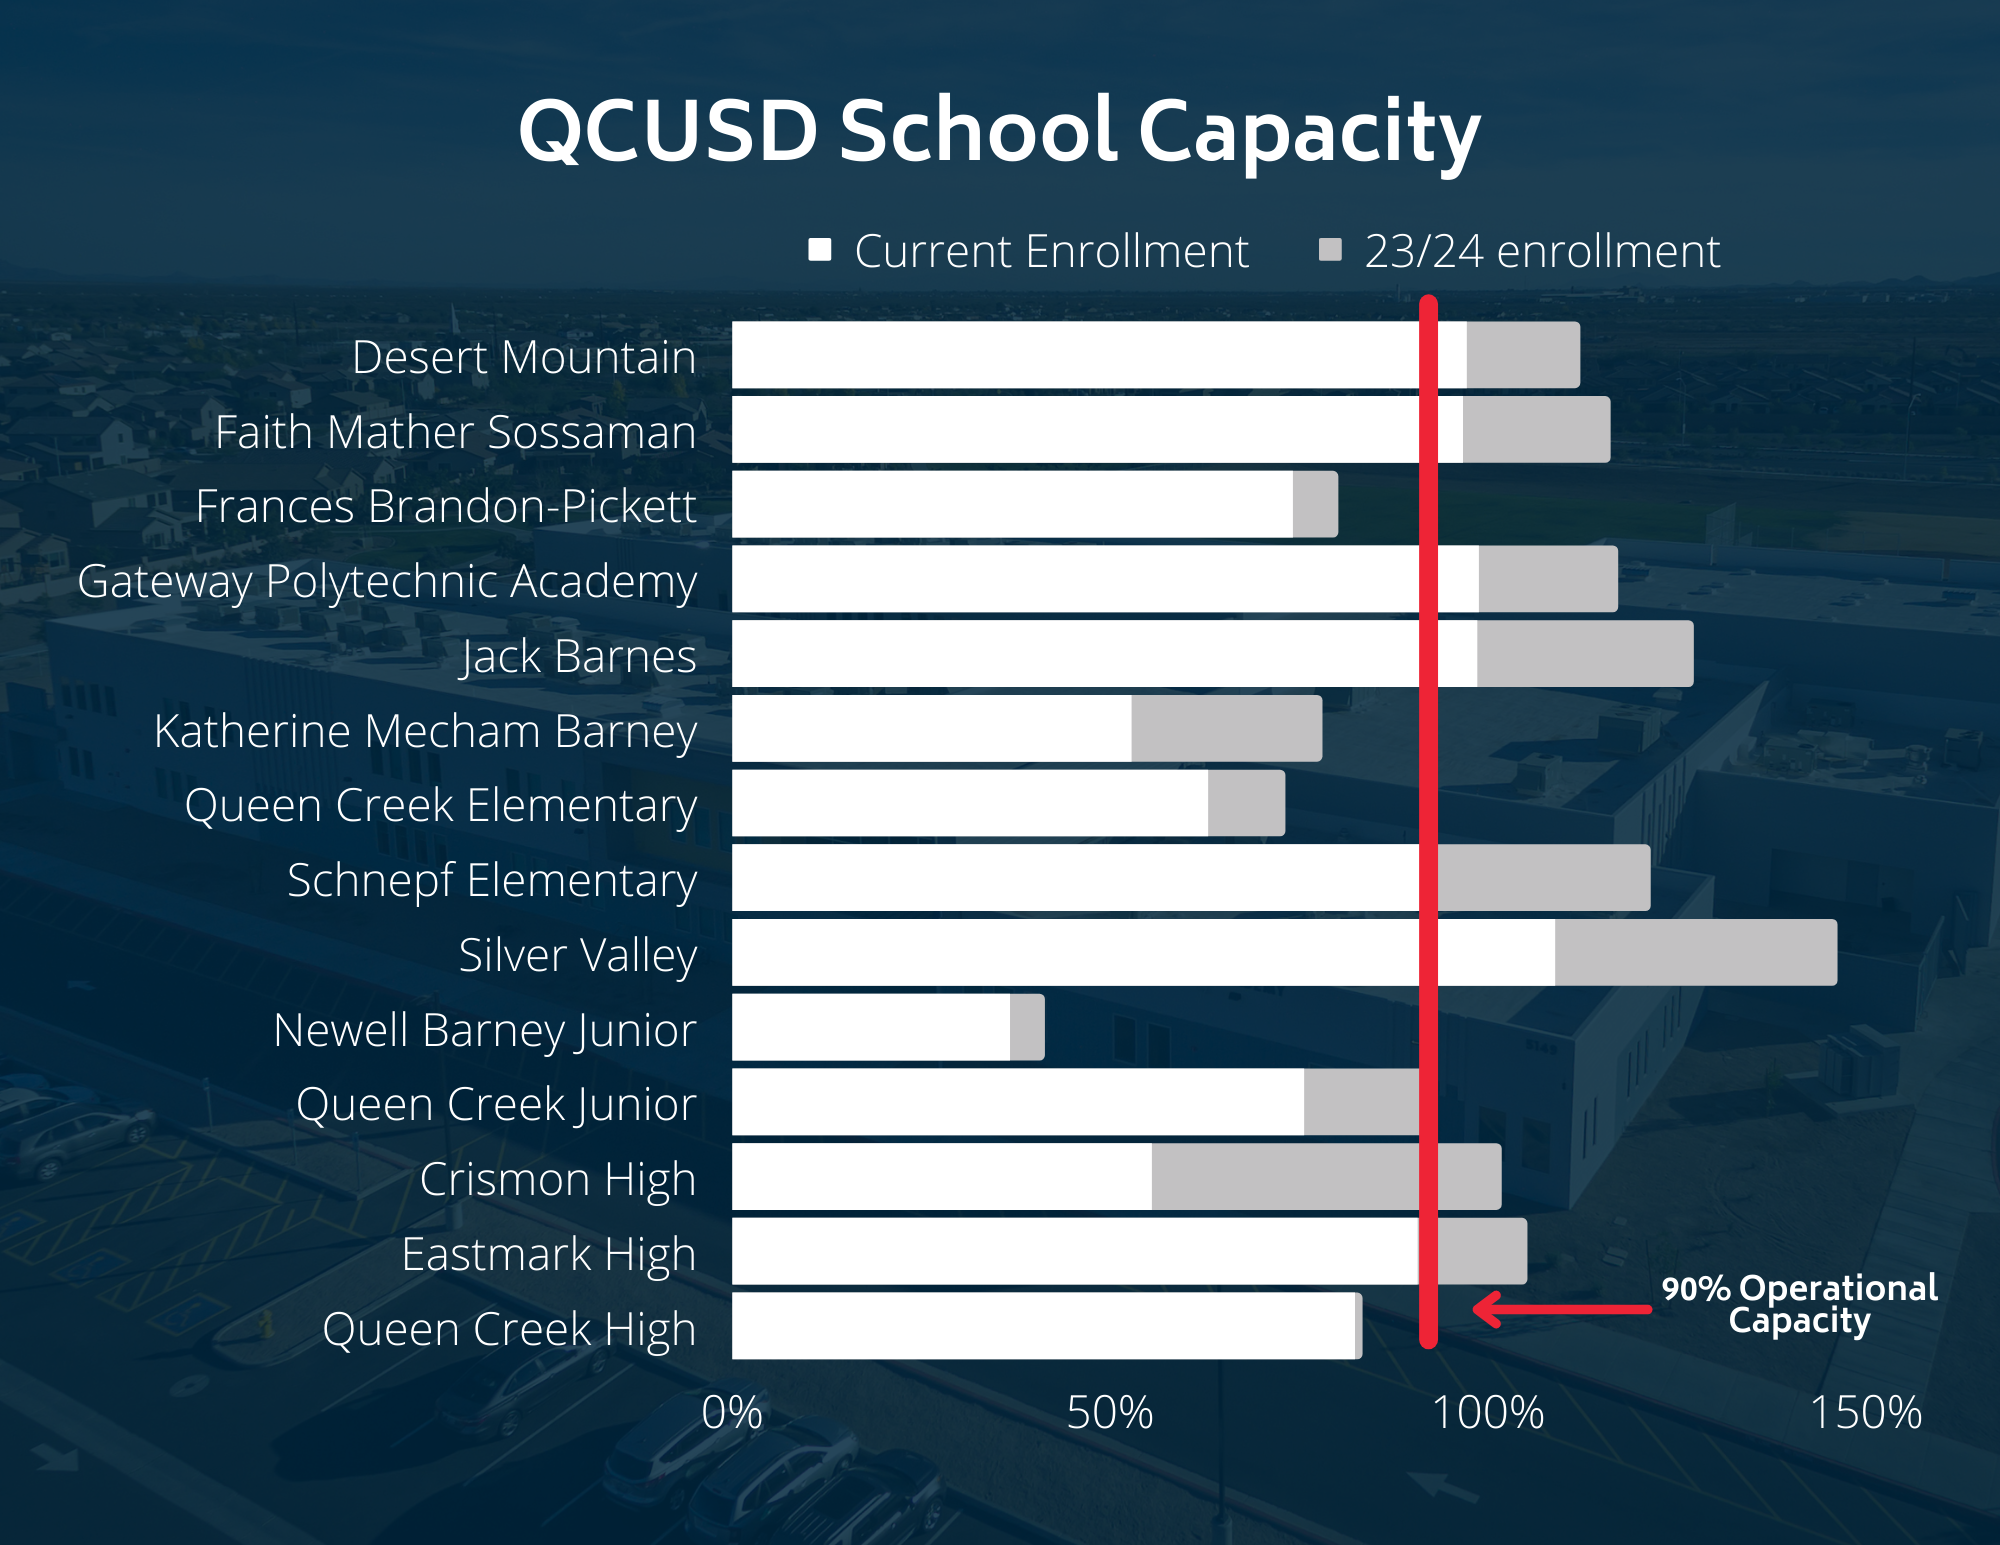 QCUSD School Capacity chart for each school